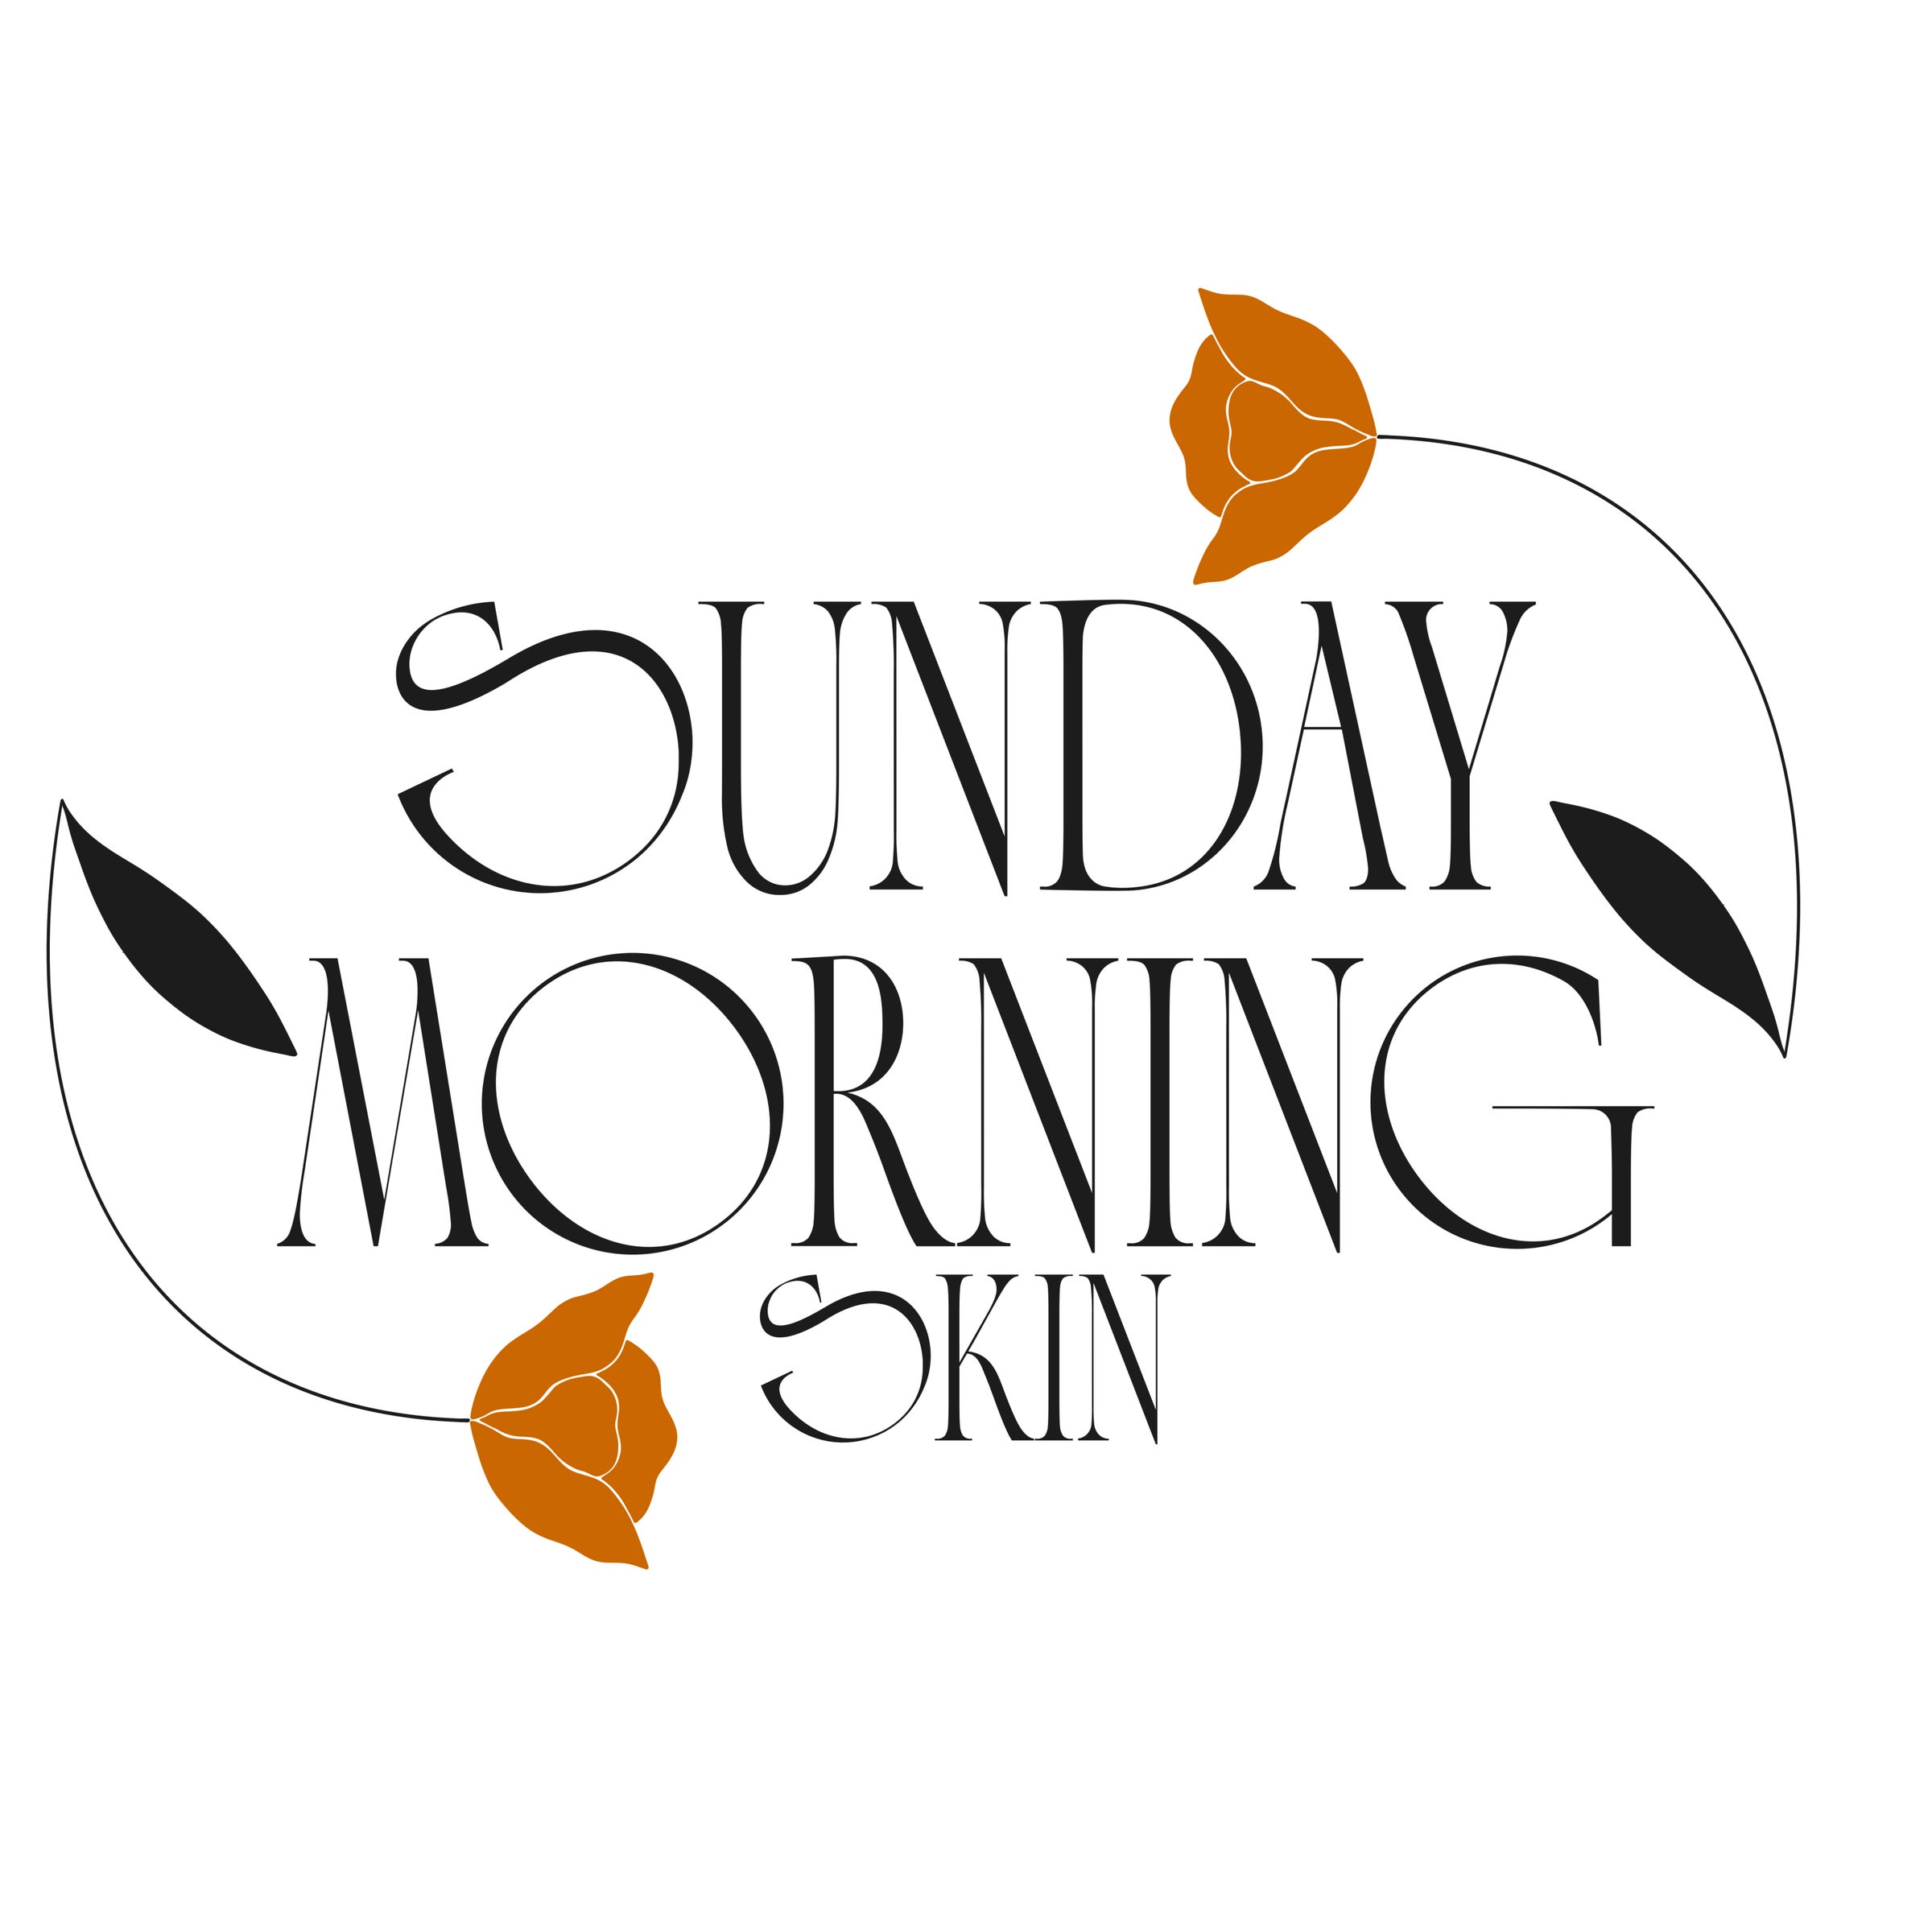 sunday good morning logo